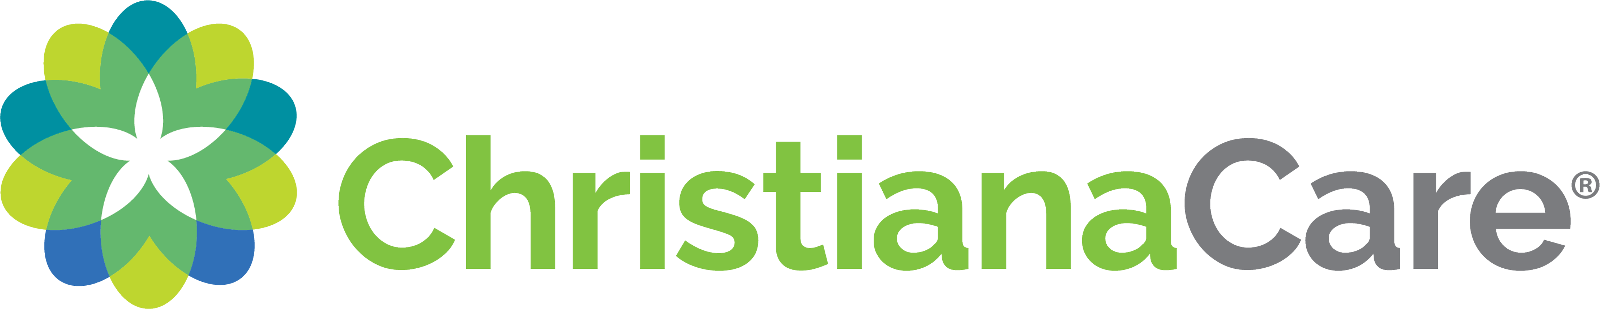 ChristianaCare  logo